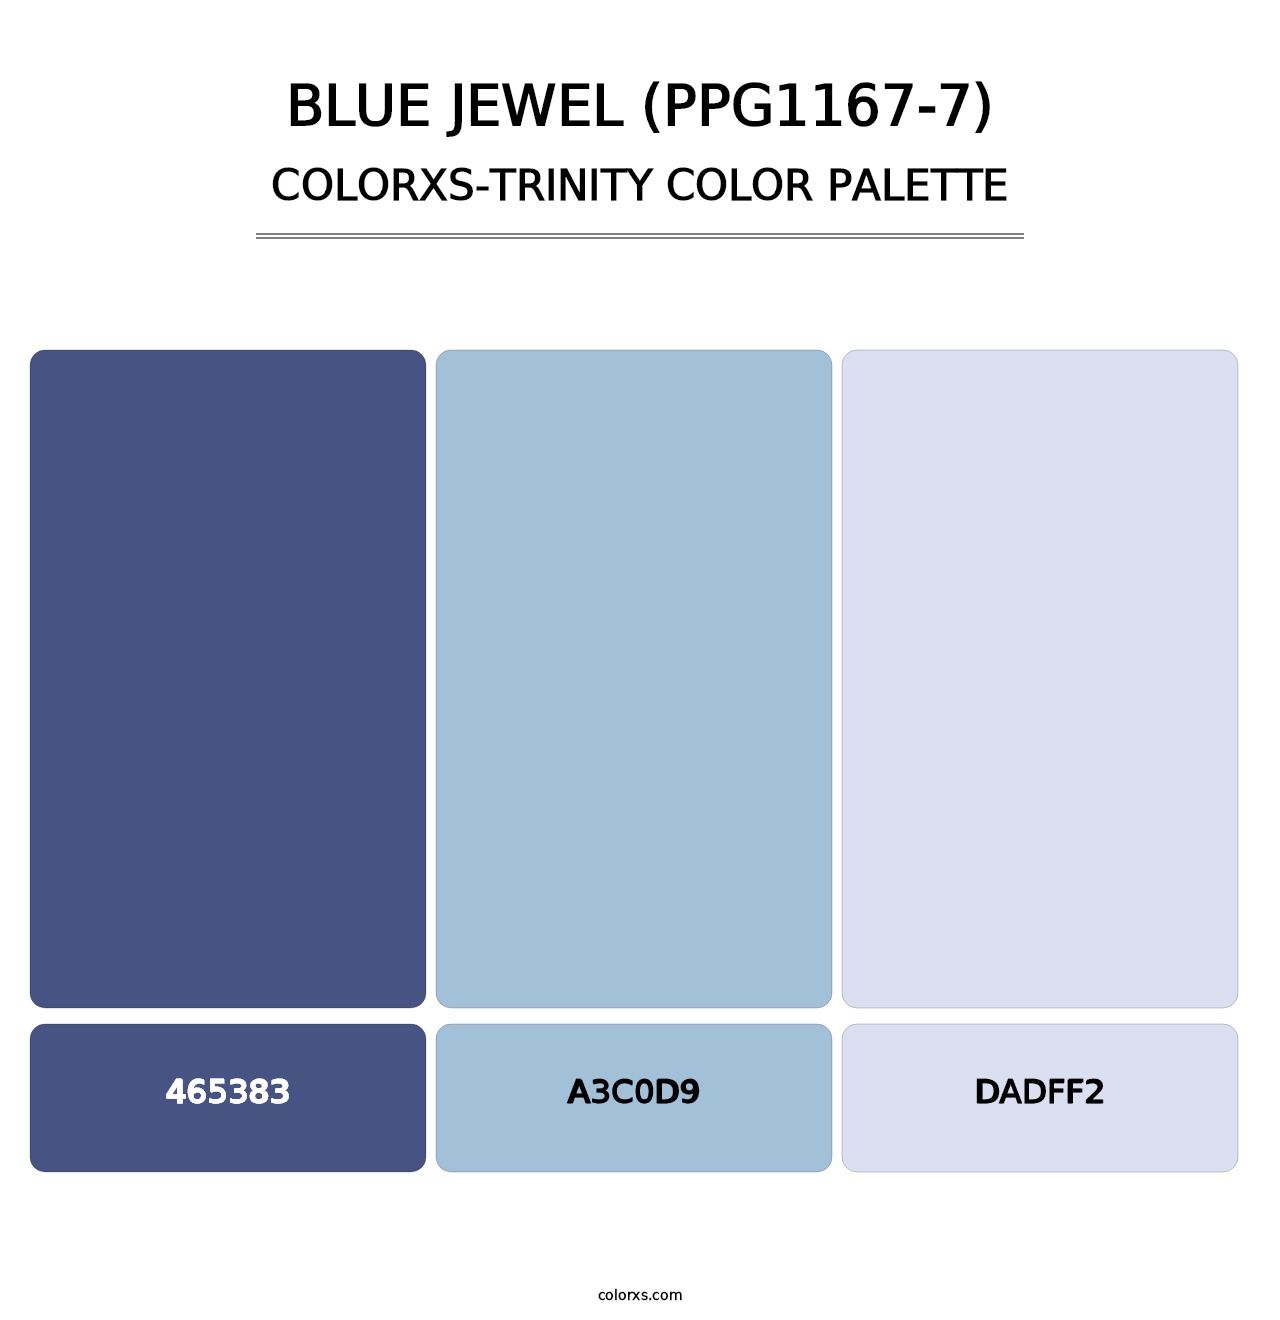 Blue Jewel (PPG1167-7) - Colorxs Trinity Palette